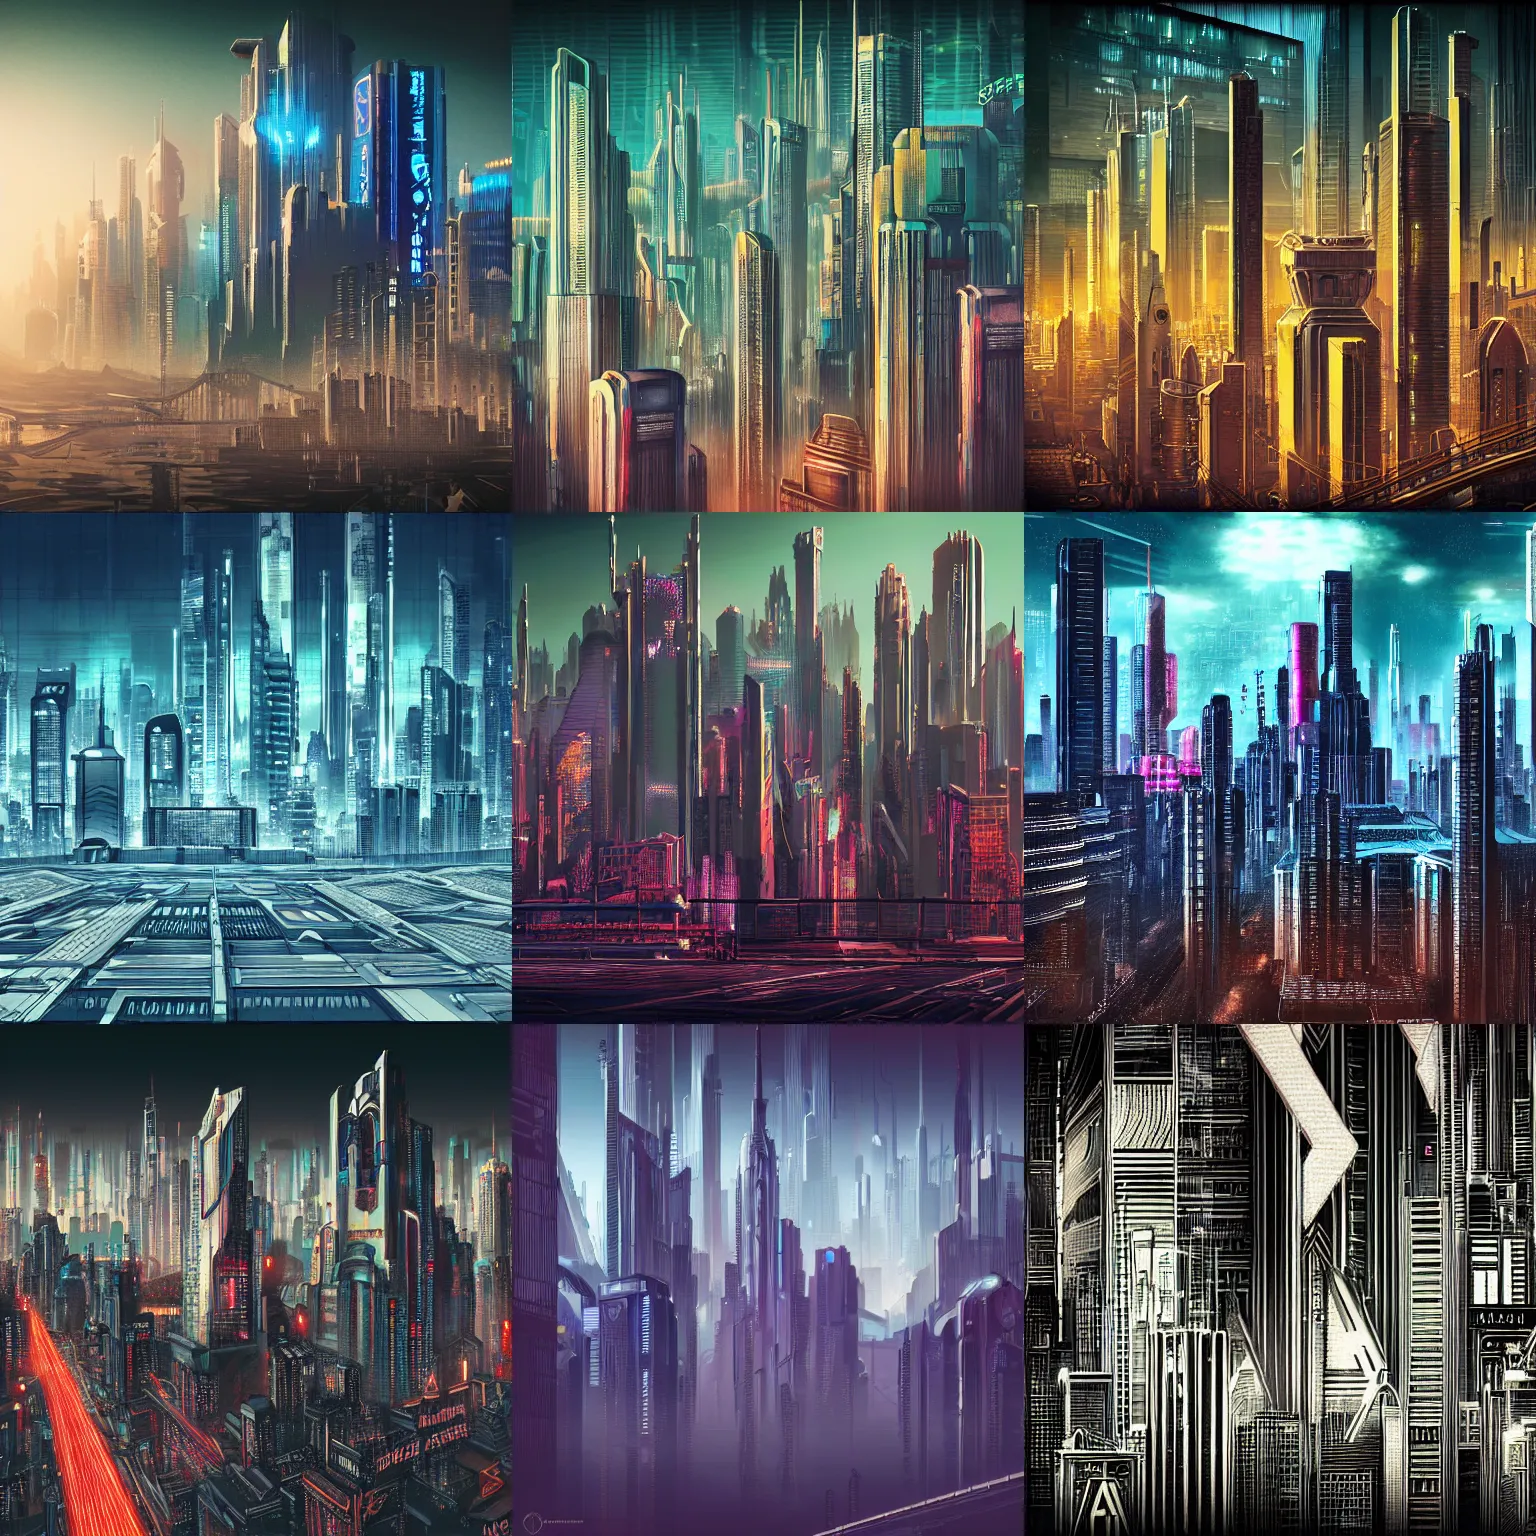 Prompt: beautiful detailed hyperrealistic photo of a cyberpunk art deco skyline